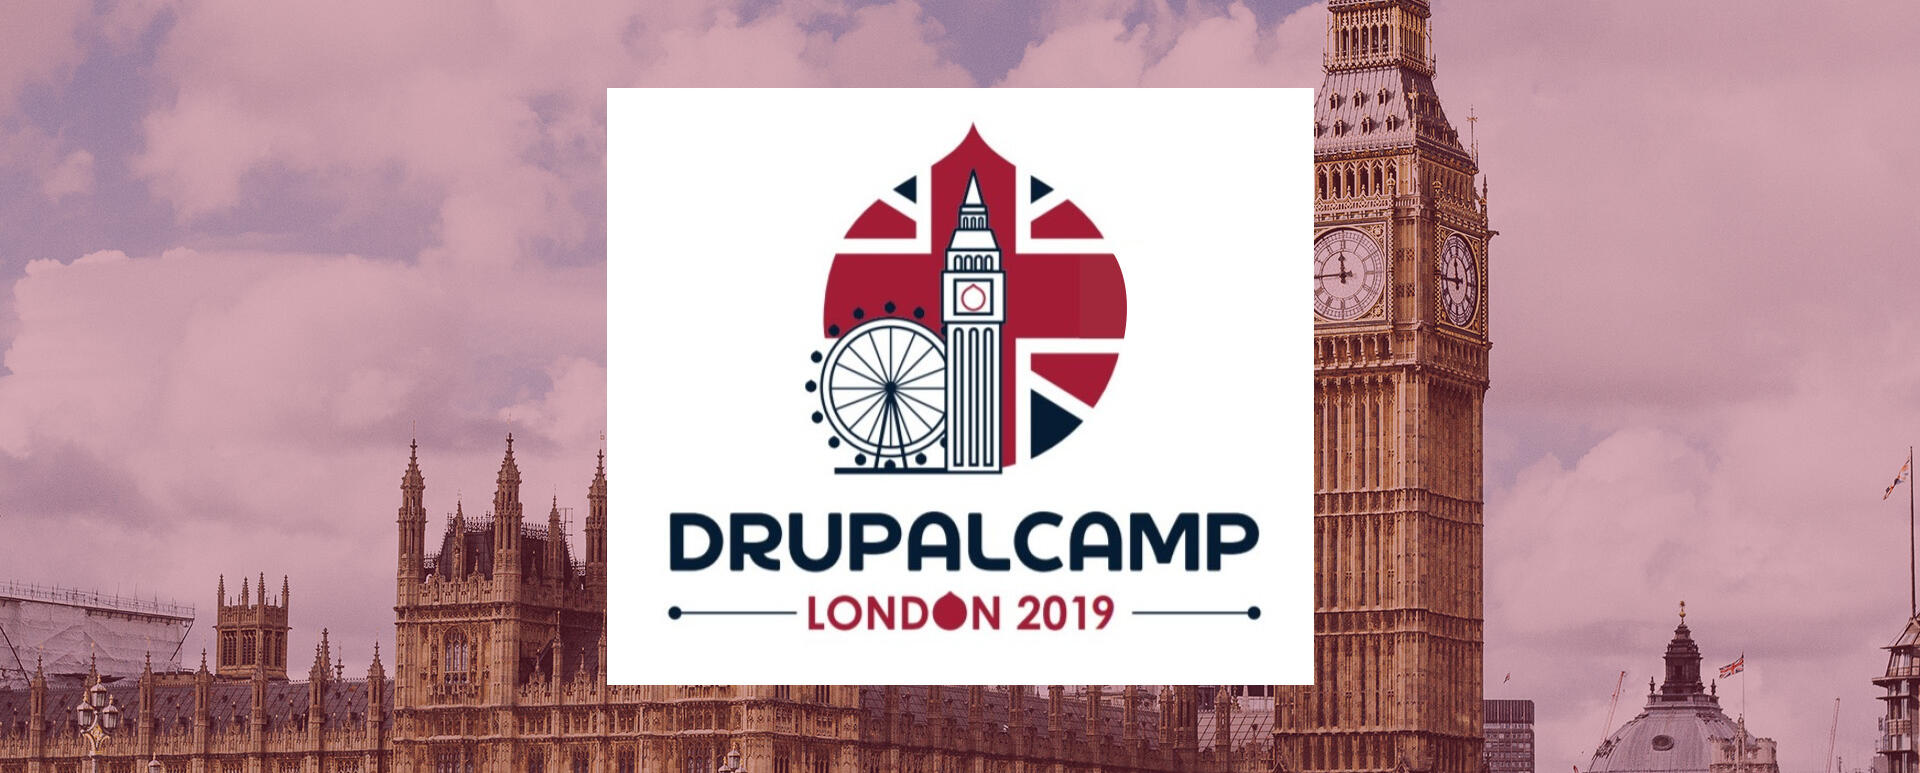 Main image DrupalCamp London 2019